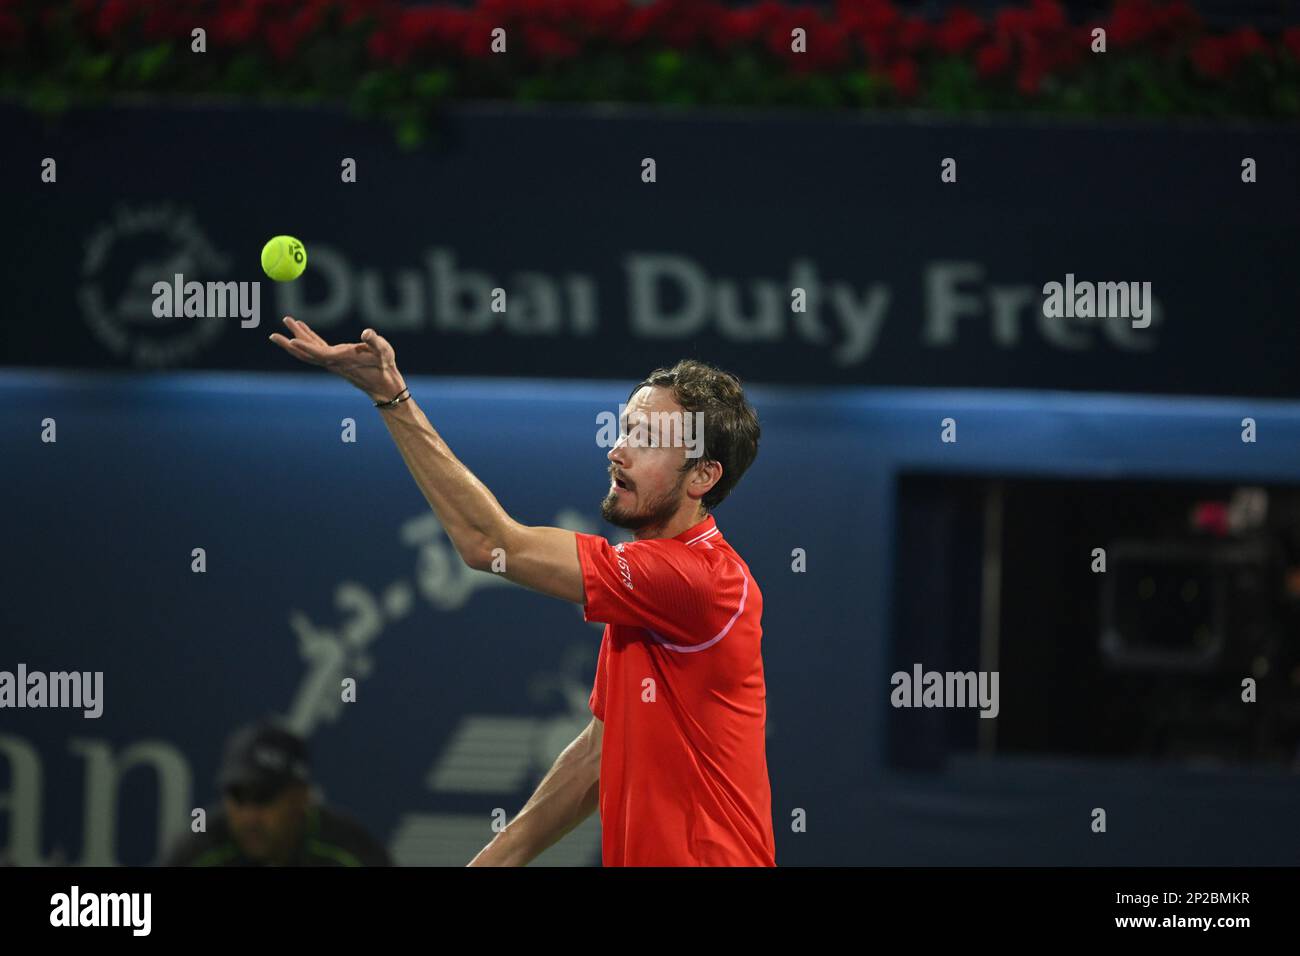 2,126 Dubai Tennis Tournament Day One Stock Photos, High-Res